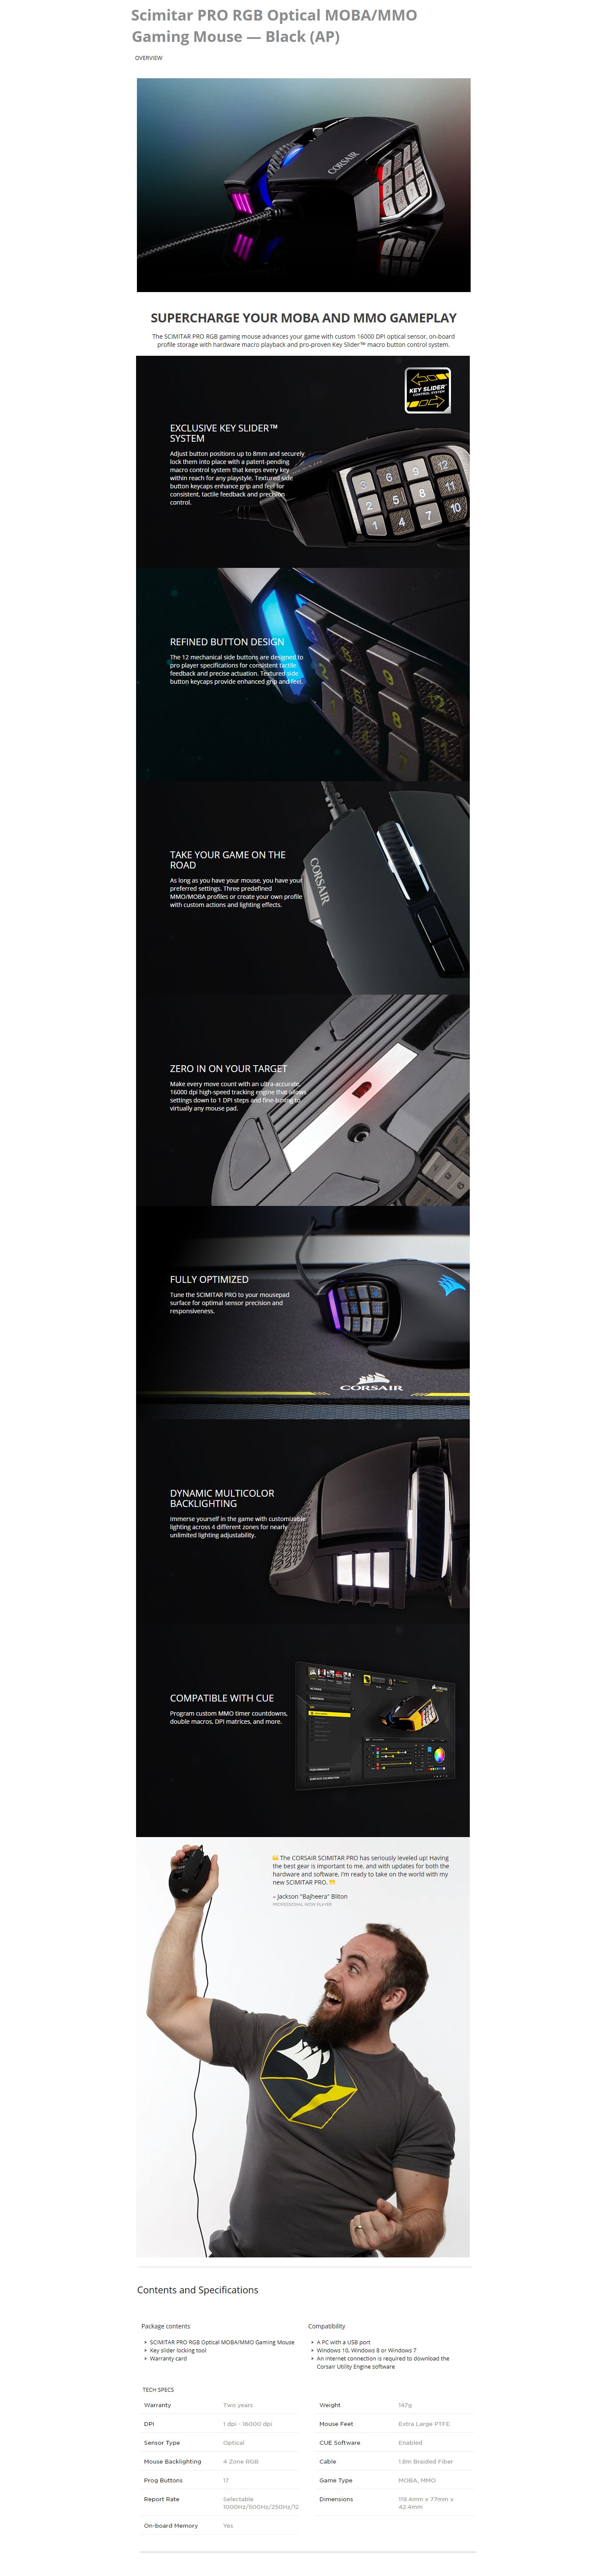 Corsair Scimitar PRO RGB Optical MOBA-MMO Gaming Mouse